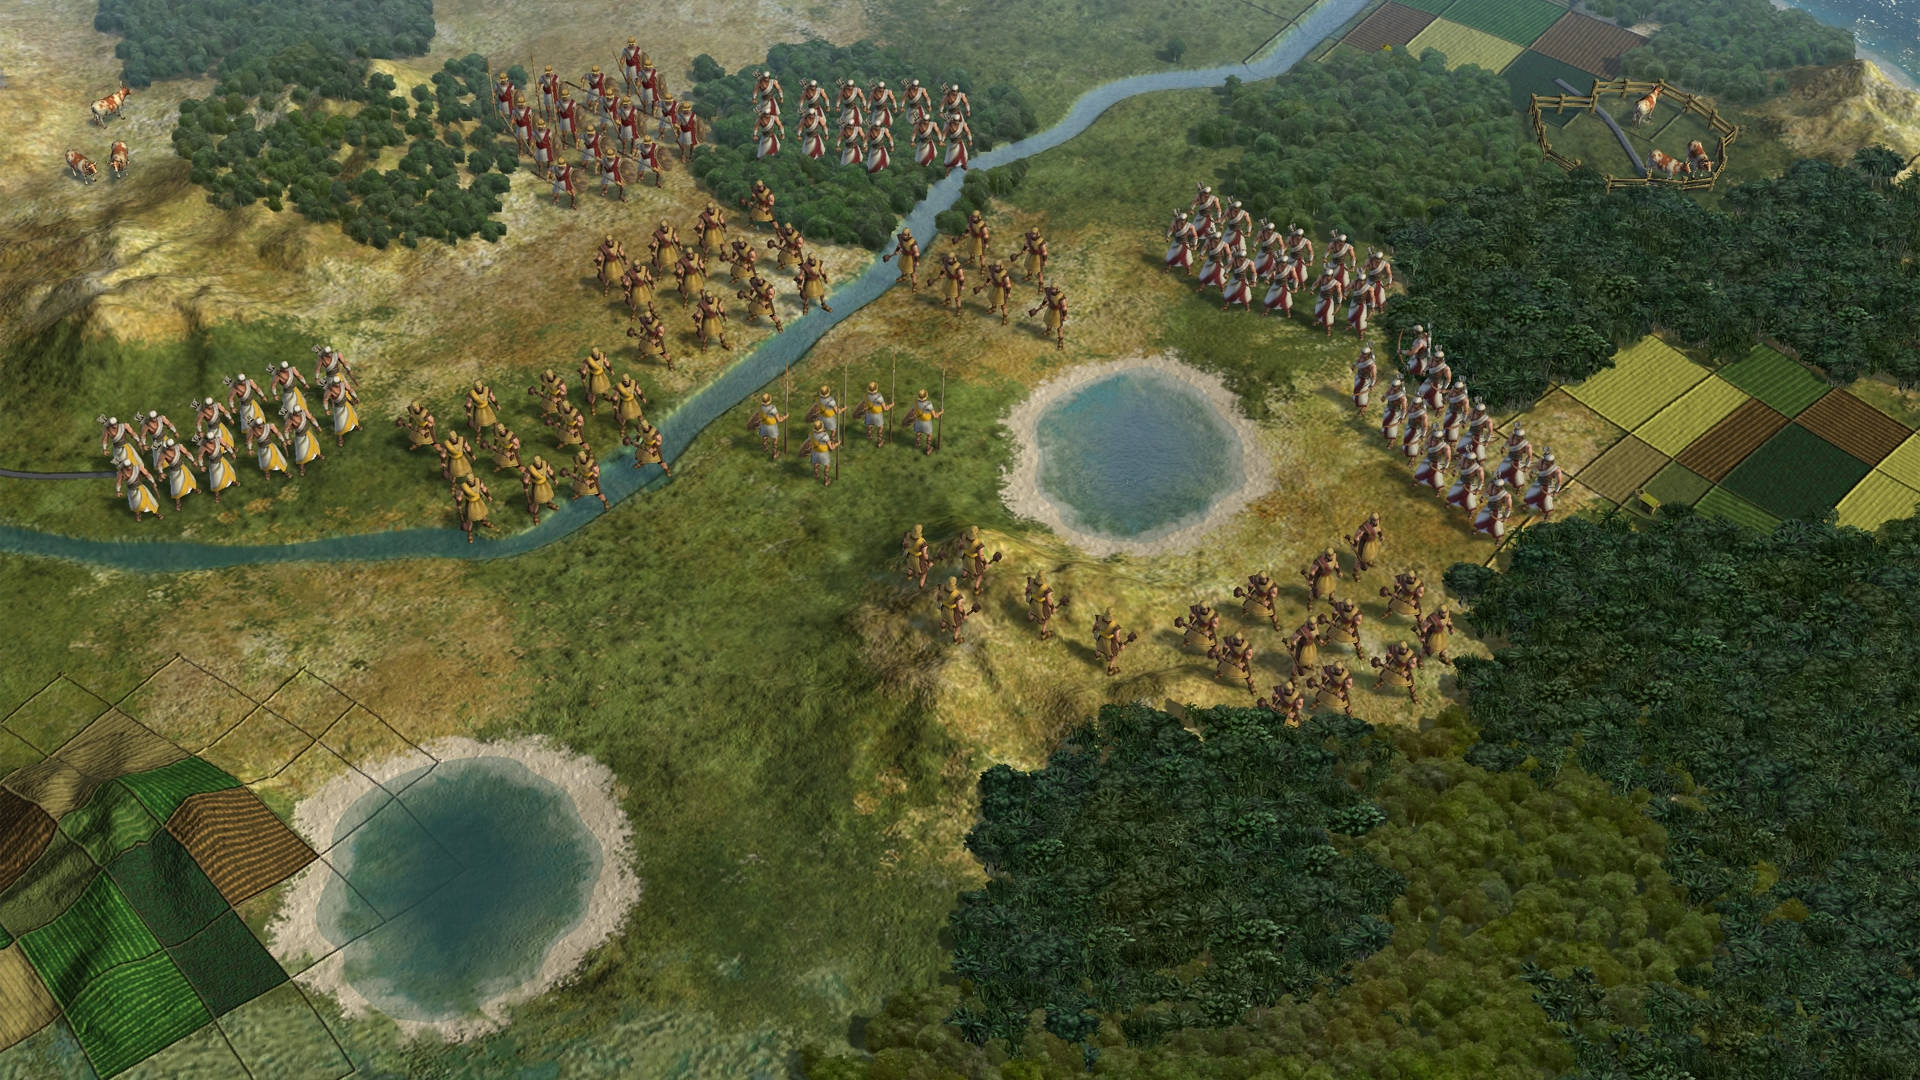 Epic Game Scene From Civilization 5 Wallpaper